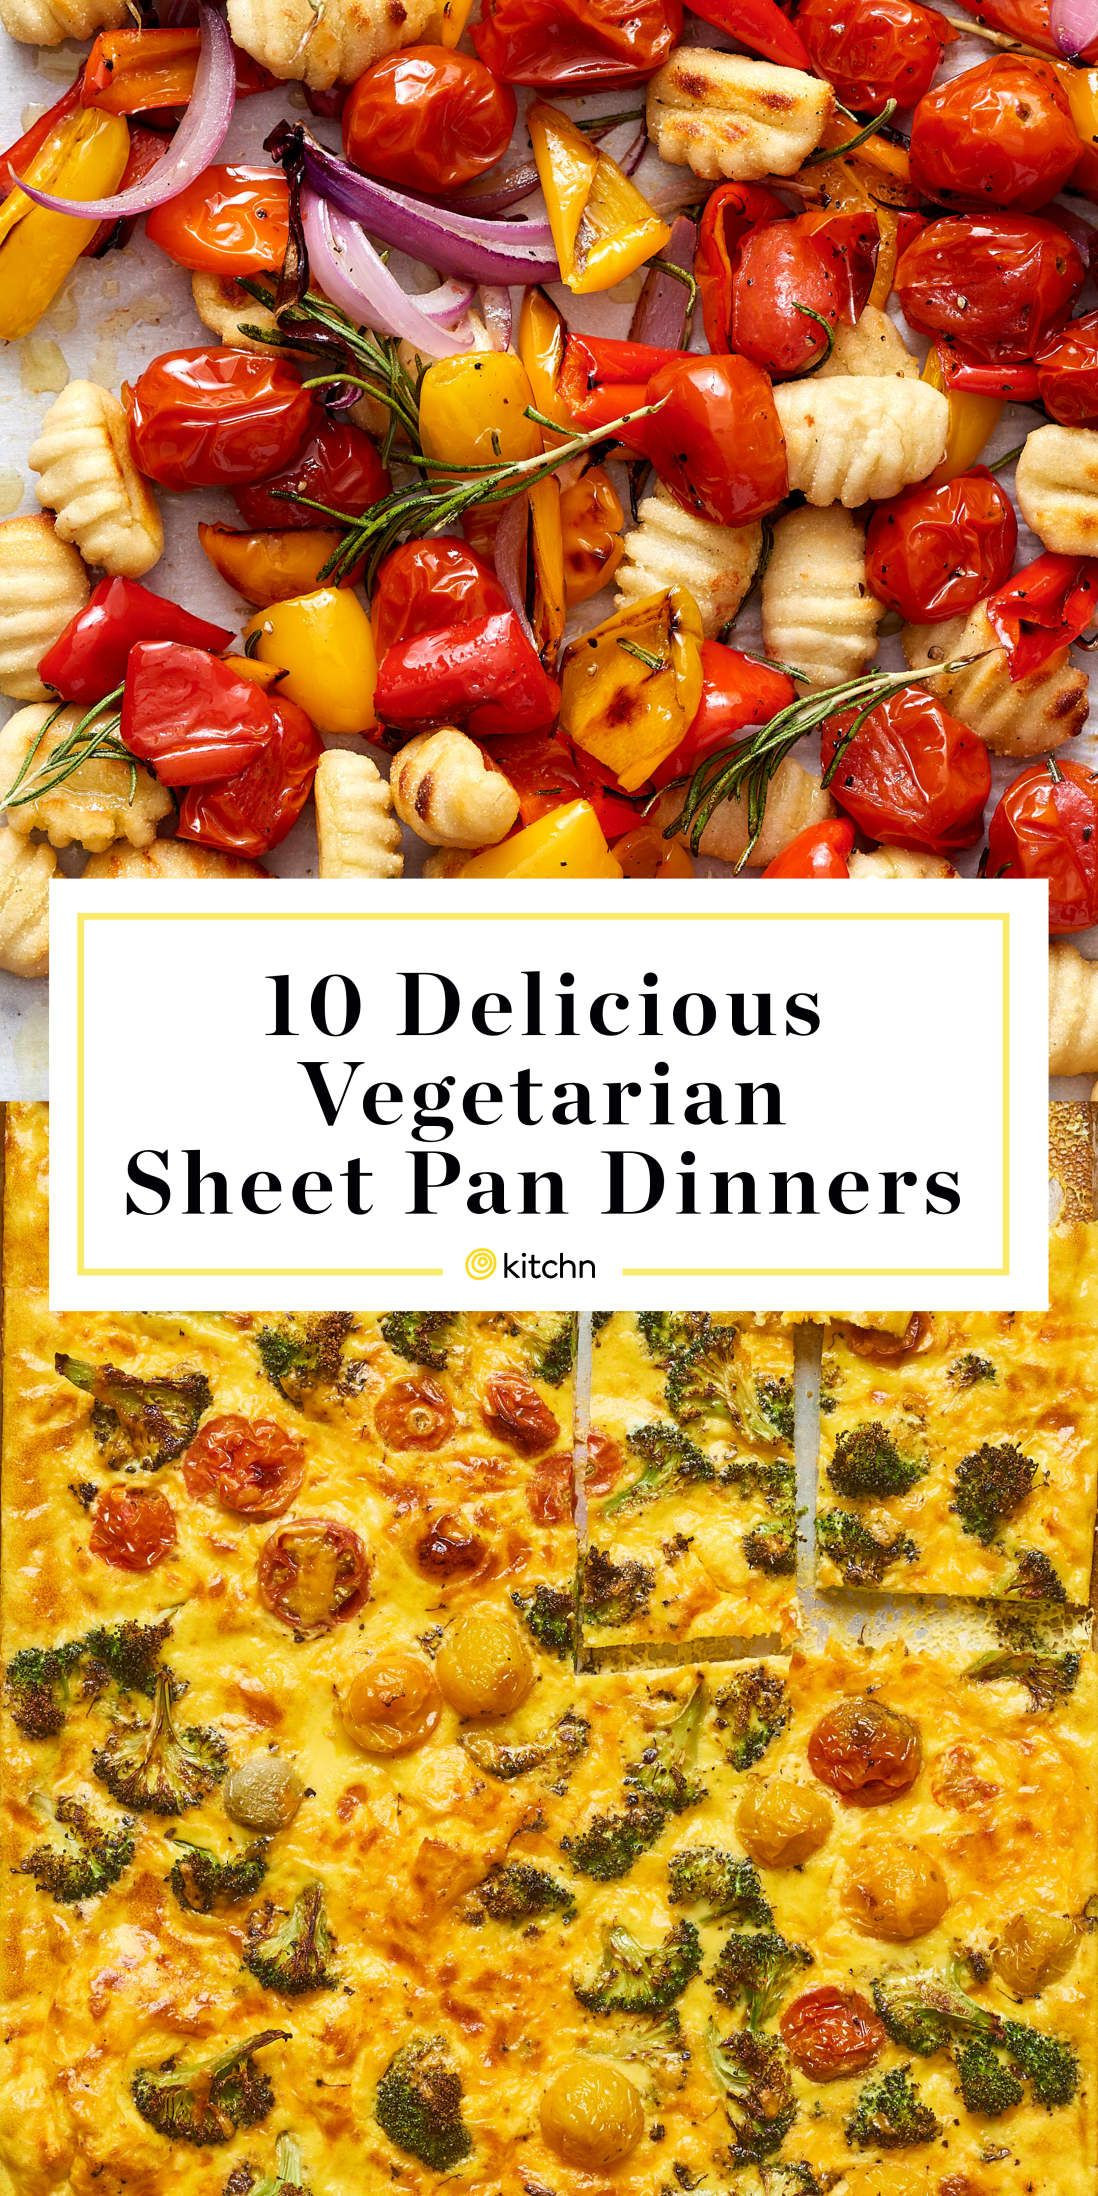 Vegetarian Sheet Pan Dinners
 10 Ve arian Sheet Pan Dinners to Add to Your Meal Plan